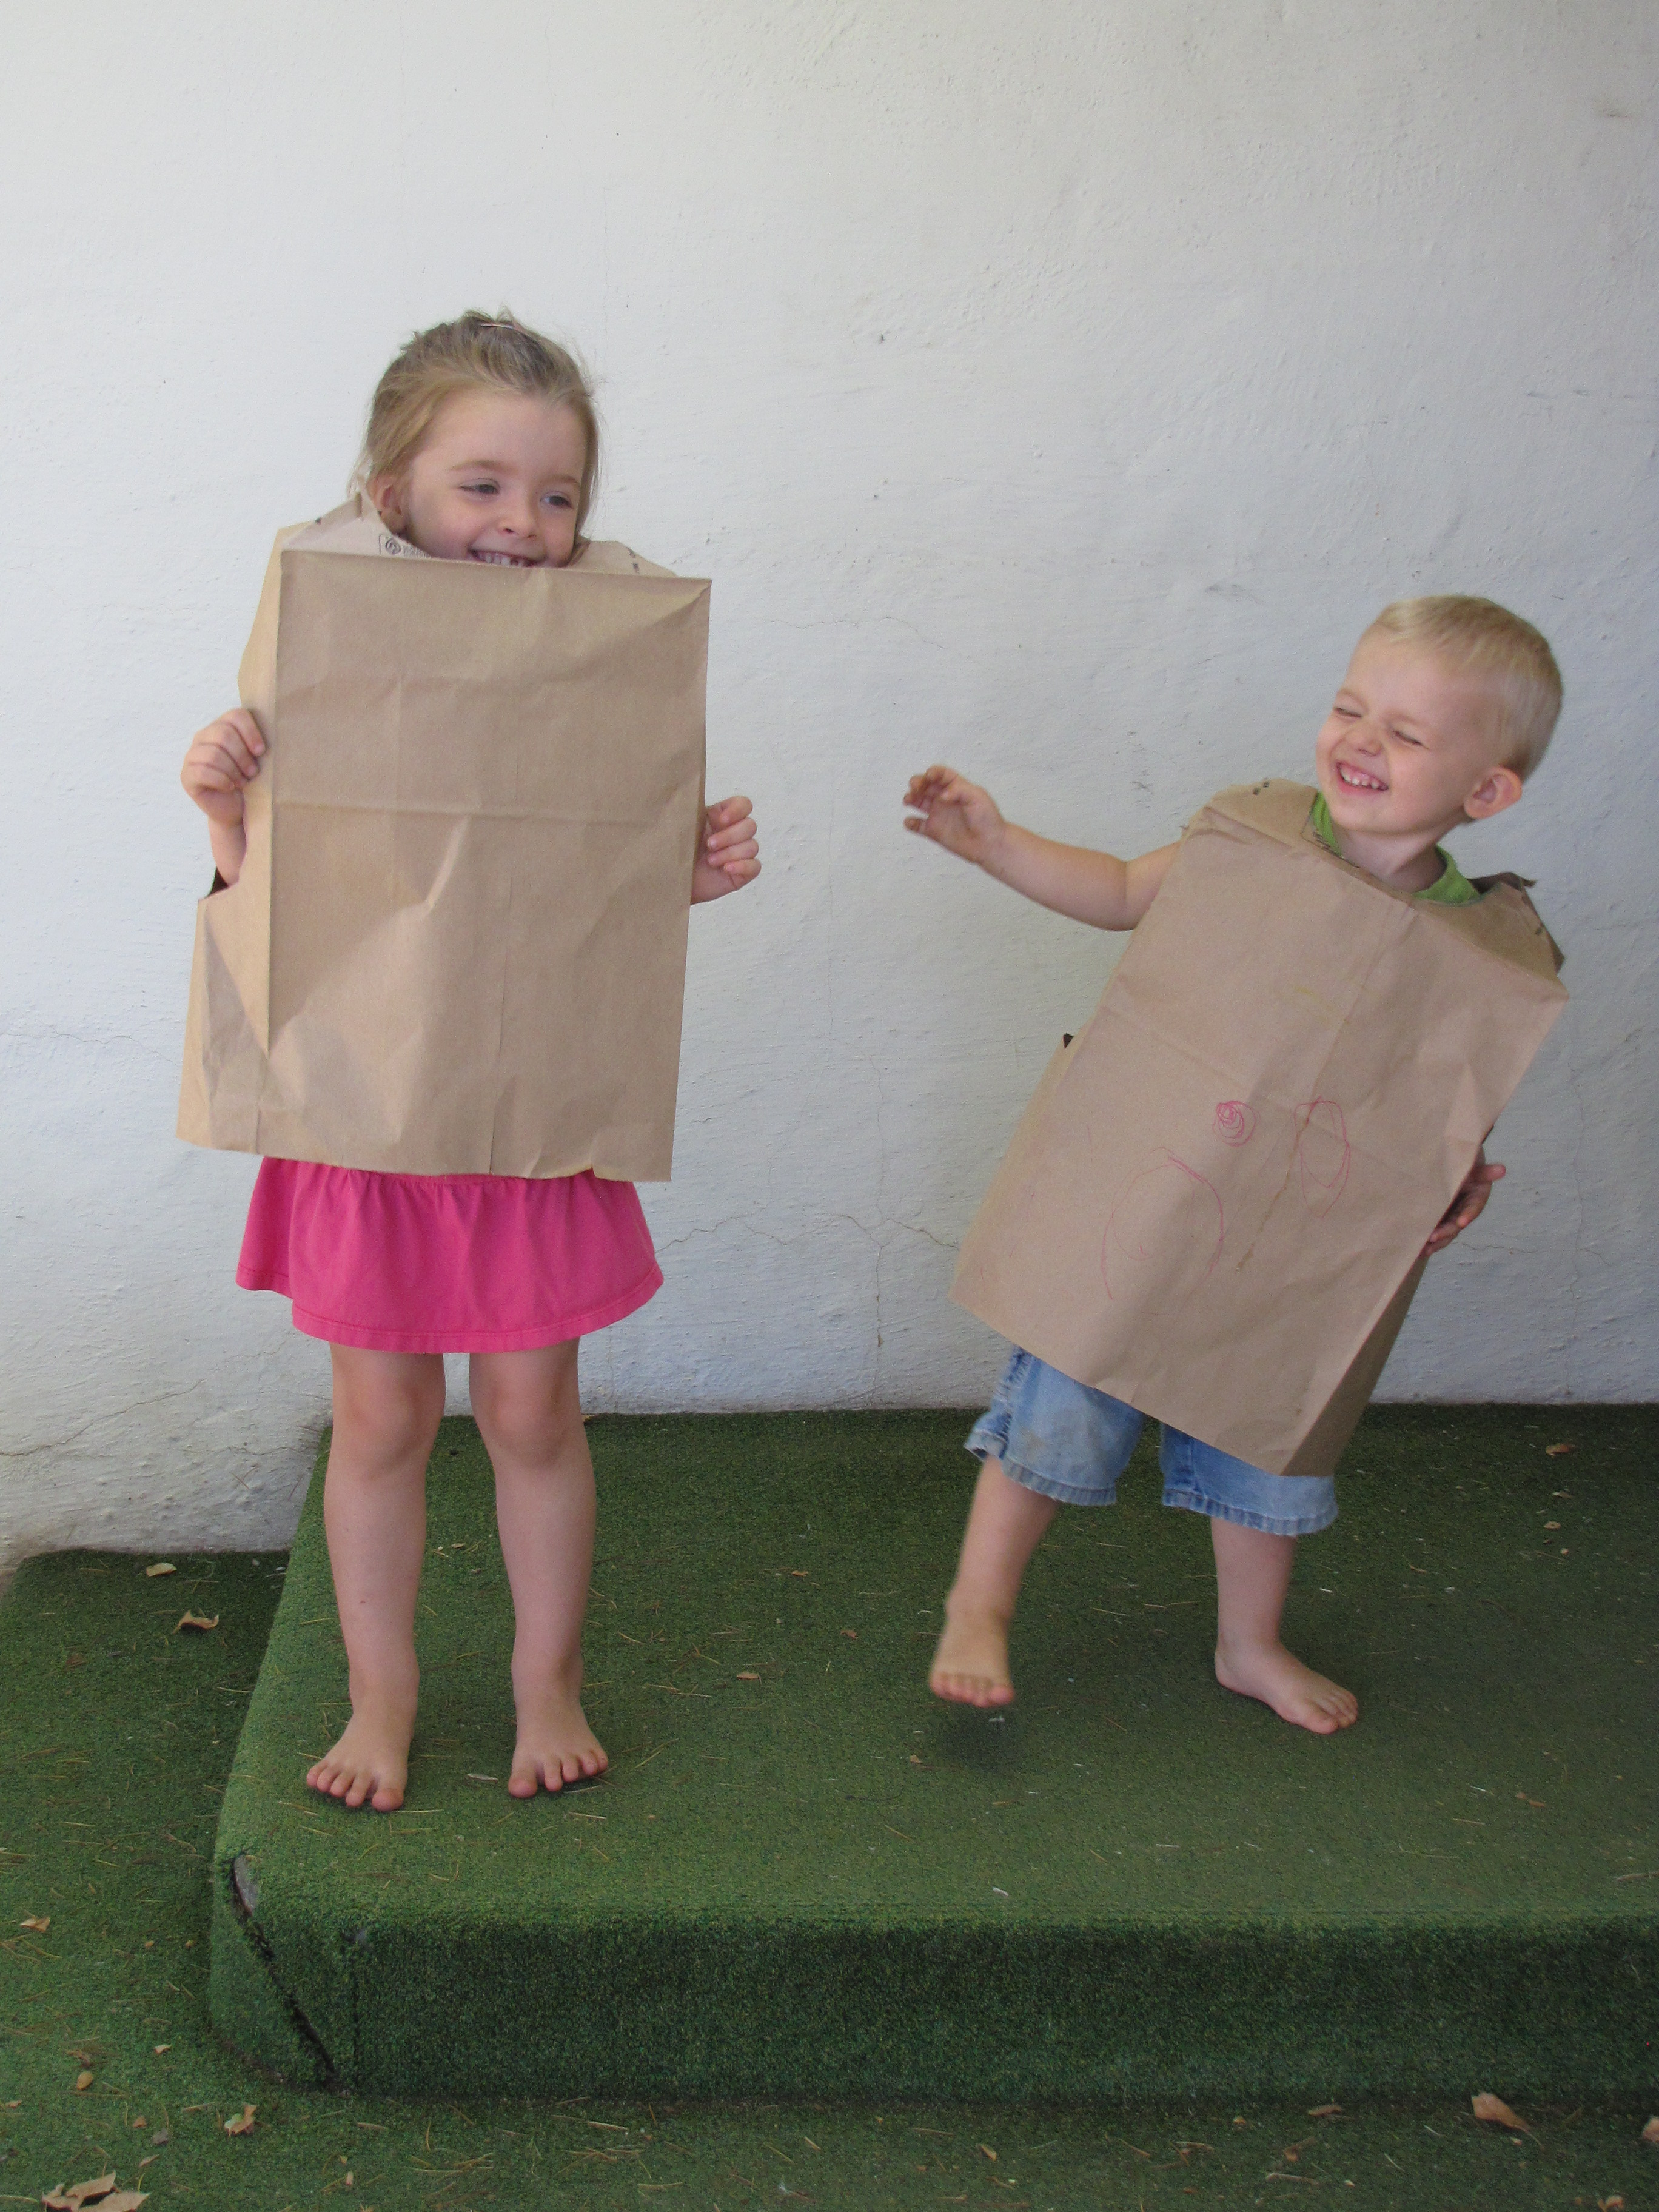 Paper Bag Costumes (Part 2)